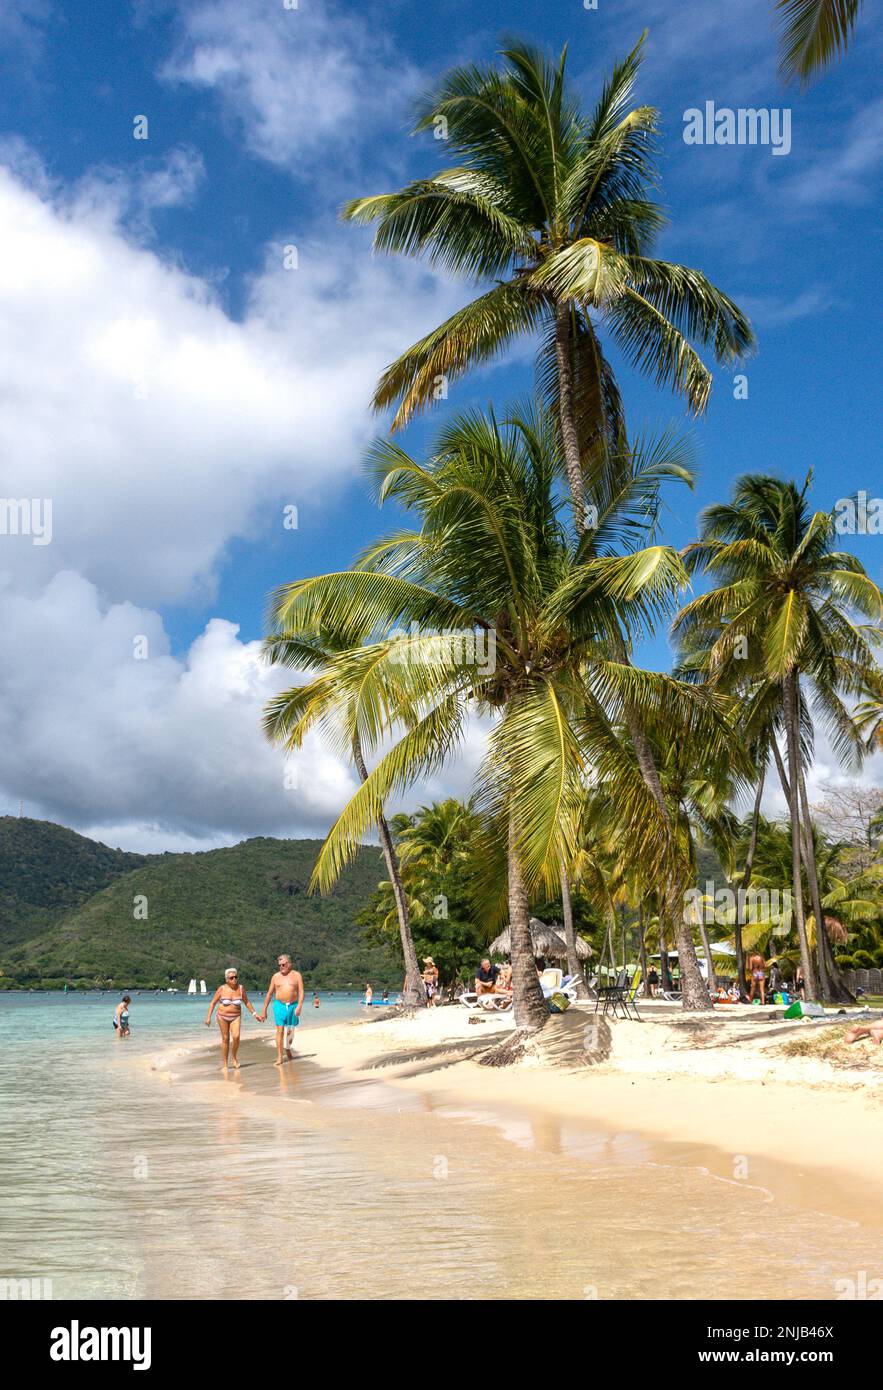 Beach view, Plage Municipale de Sainte-Anne, Sainte-Anne, Le Marin, Martinique, Lesser Antilles, Caribbean Stock Photo